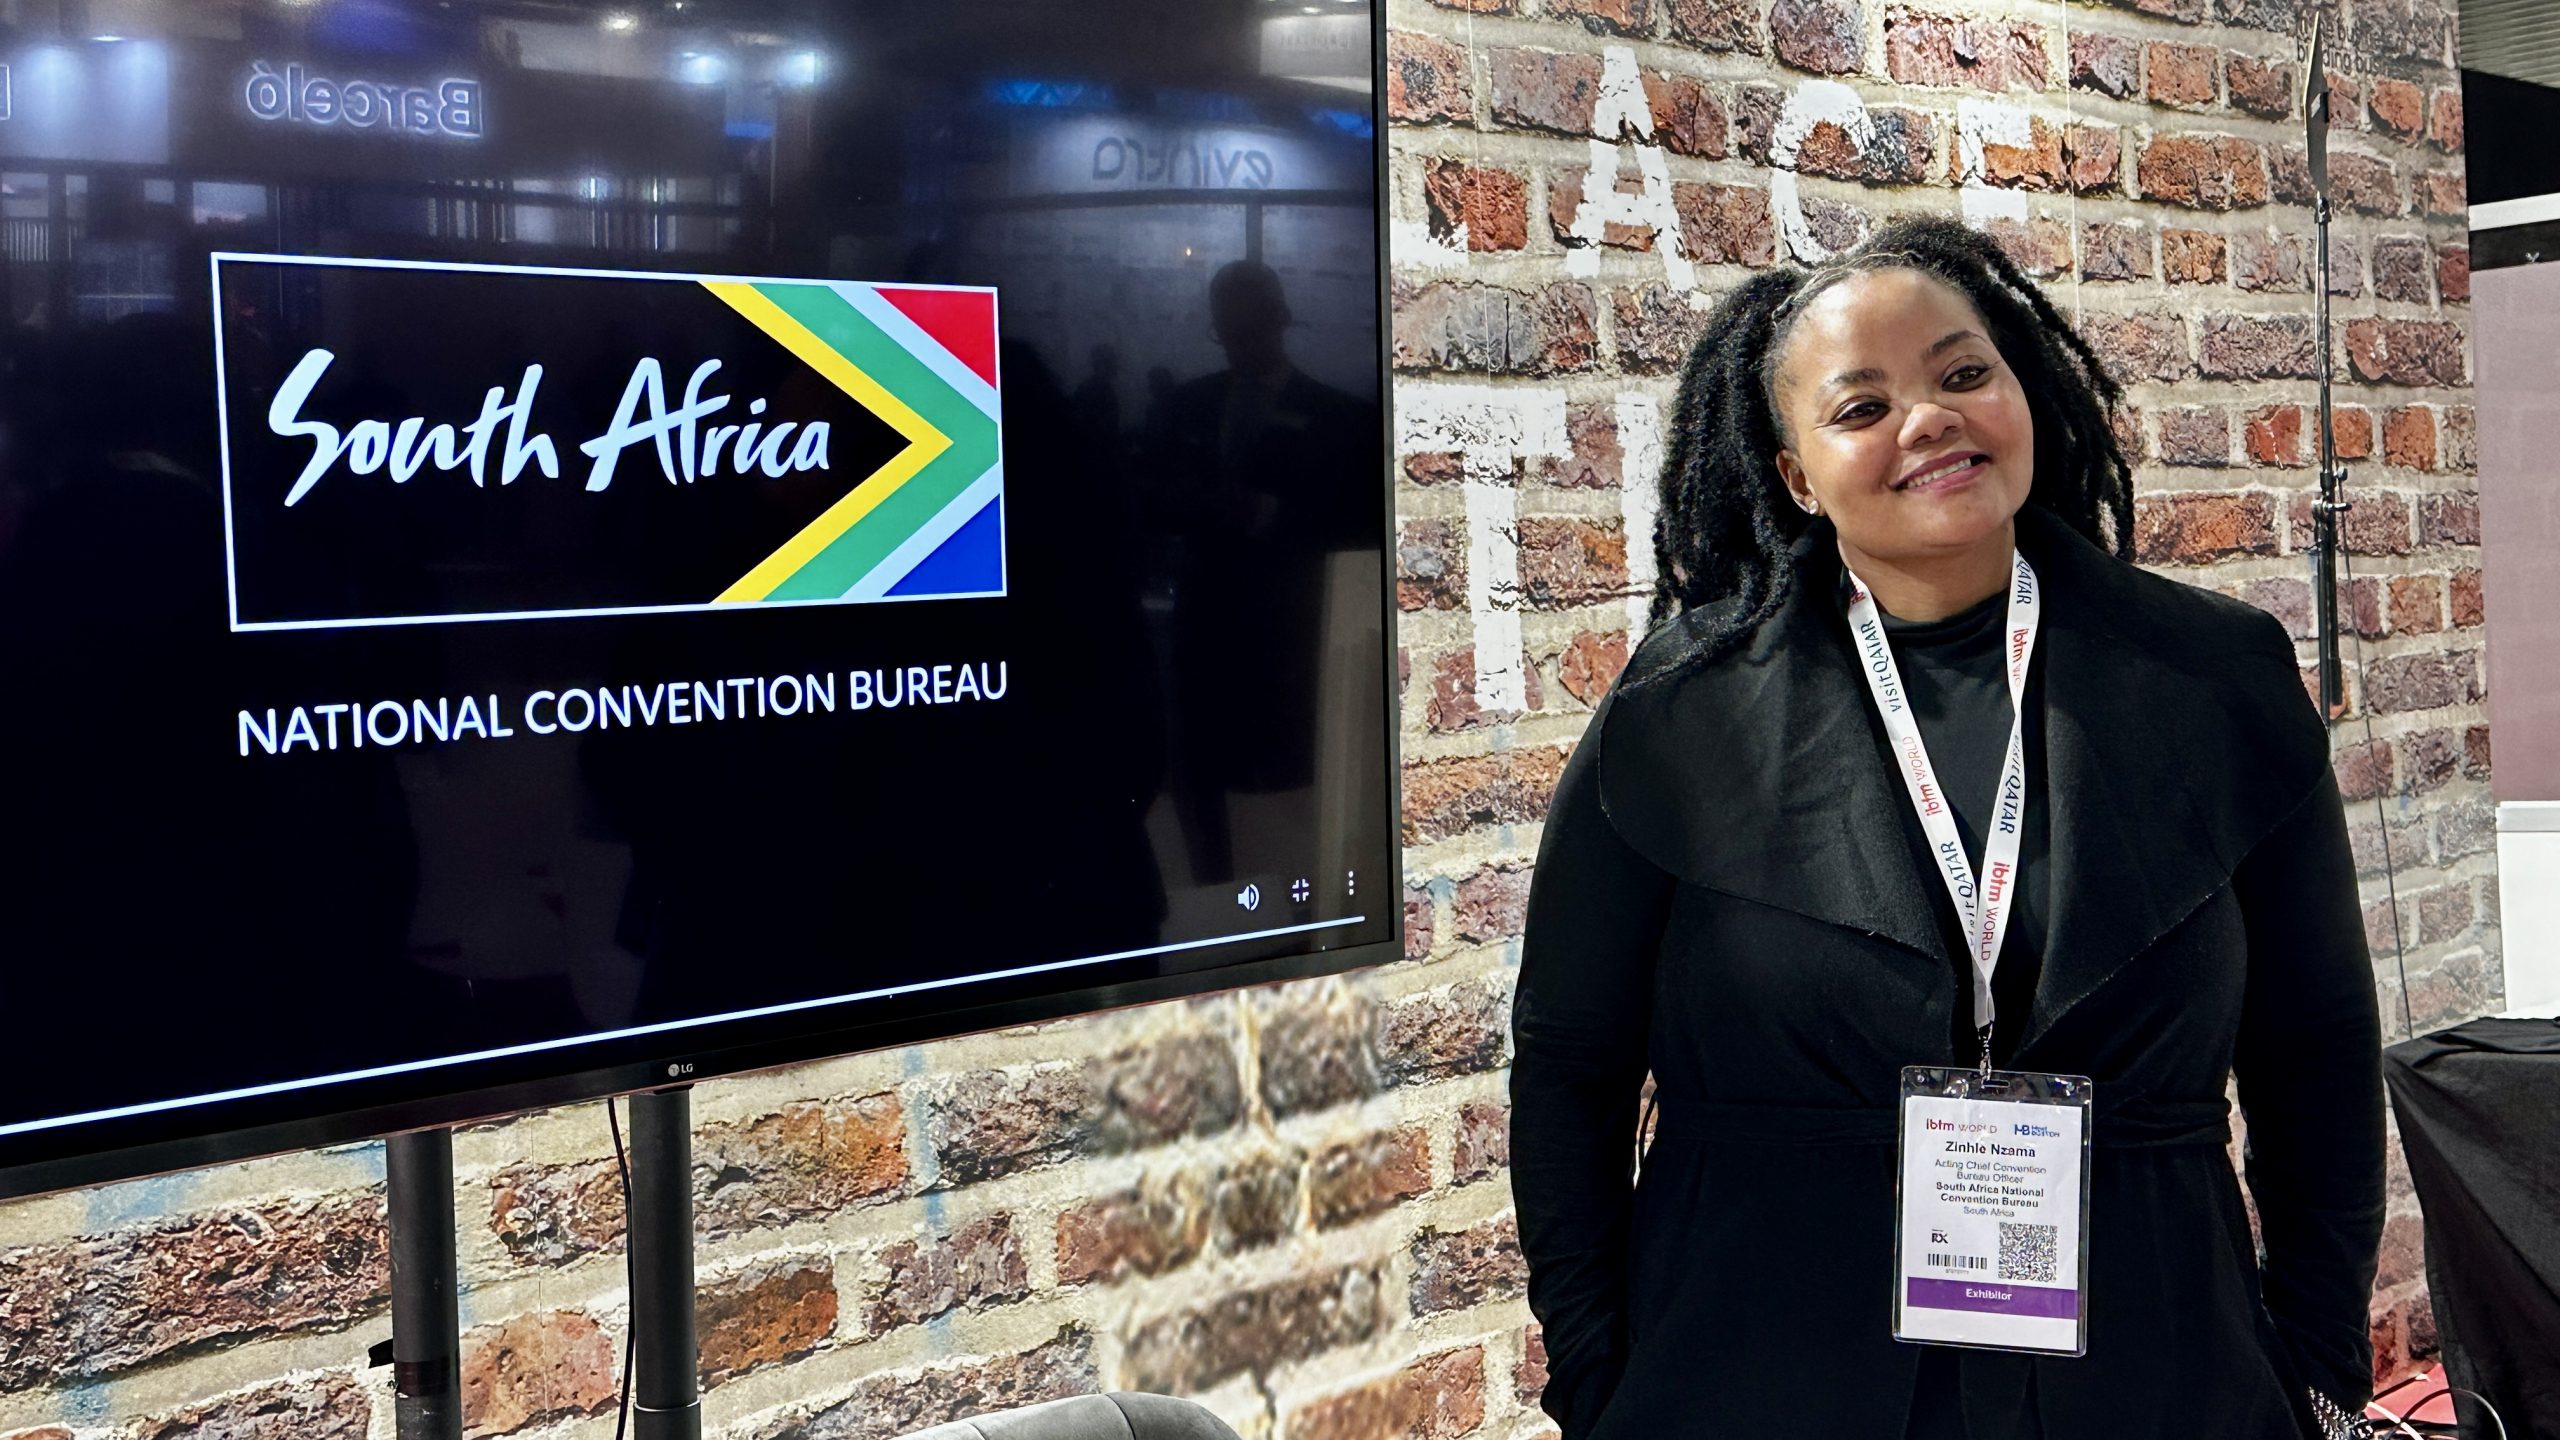 Zinhole Nzama, Acting Chief Convention Bureau Officer, South Africa National Convention Bureau - Unravel Travel TV